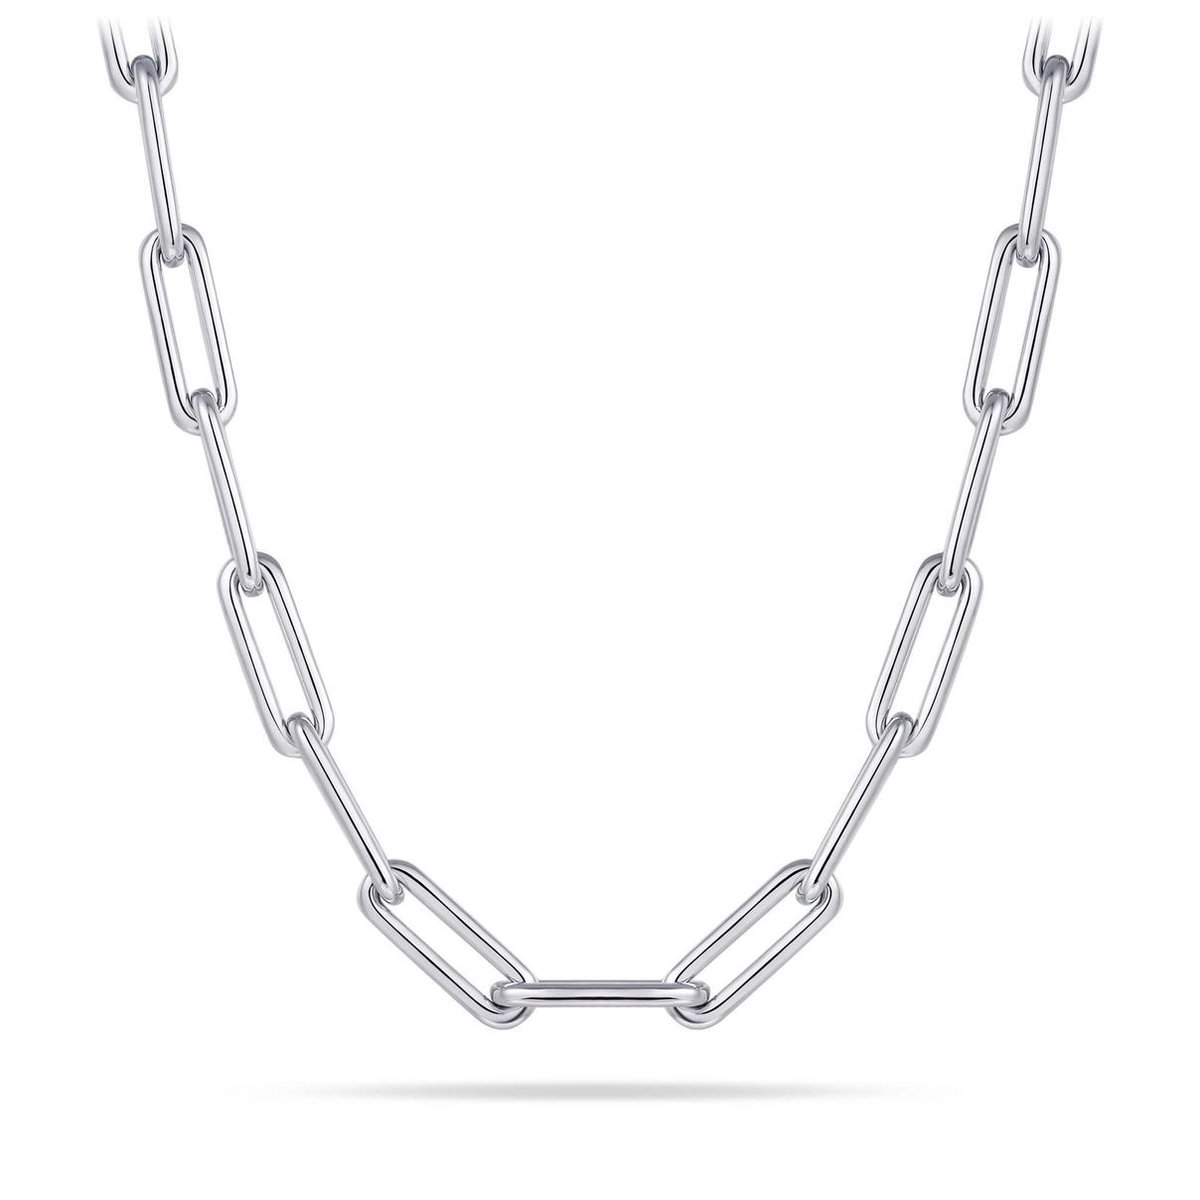 Jewels Inc. - Hanger incl. Collier - Closed Forevere - 16.5mm x 5.5mm - Lengte 42+5cm - Gerhodineerd Zilver 925